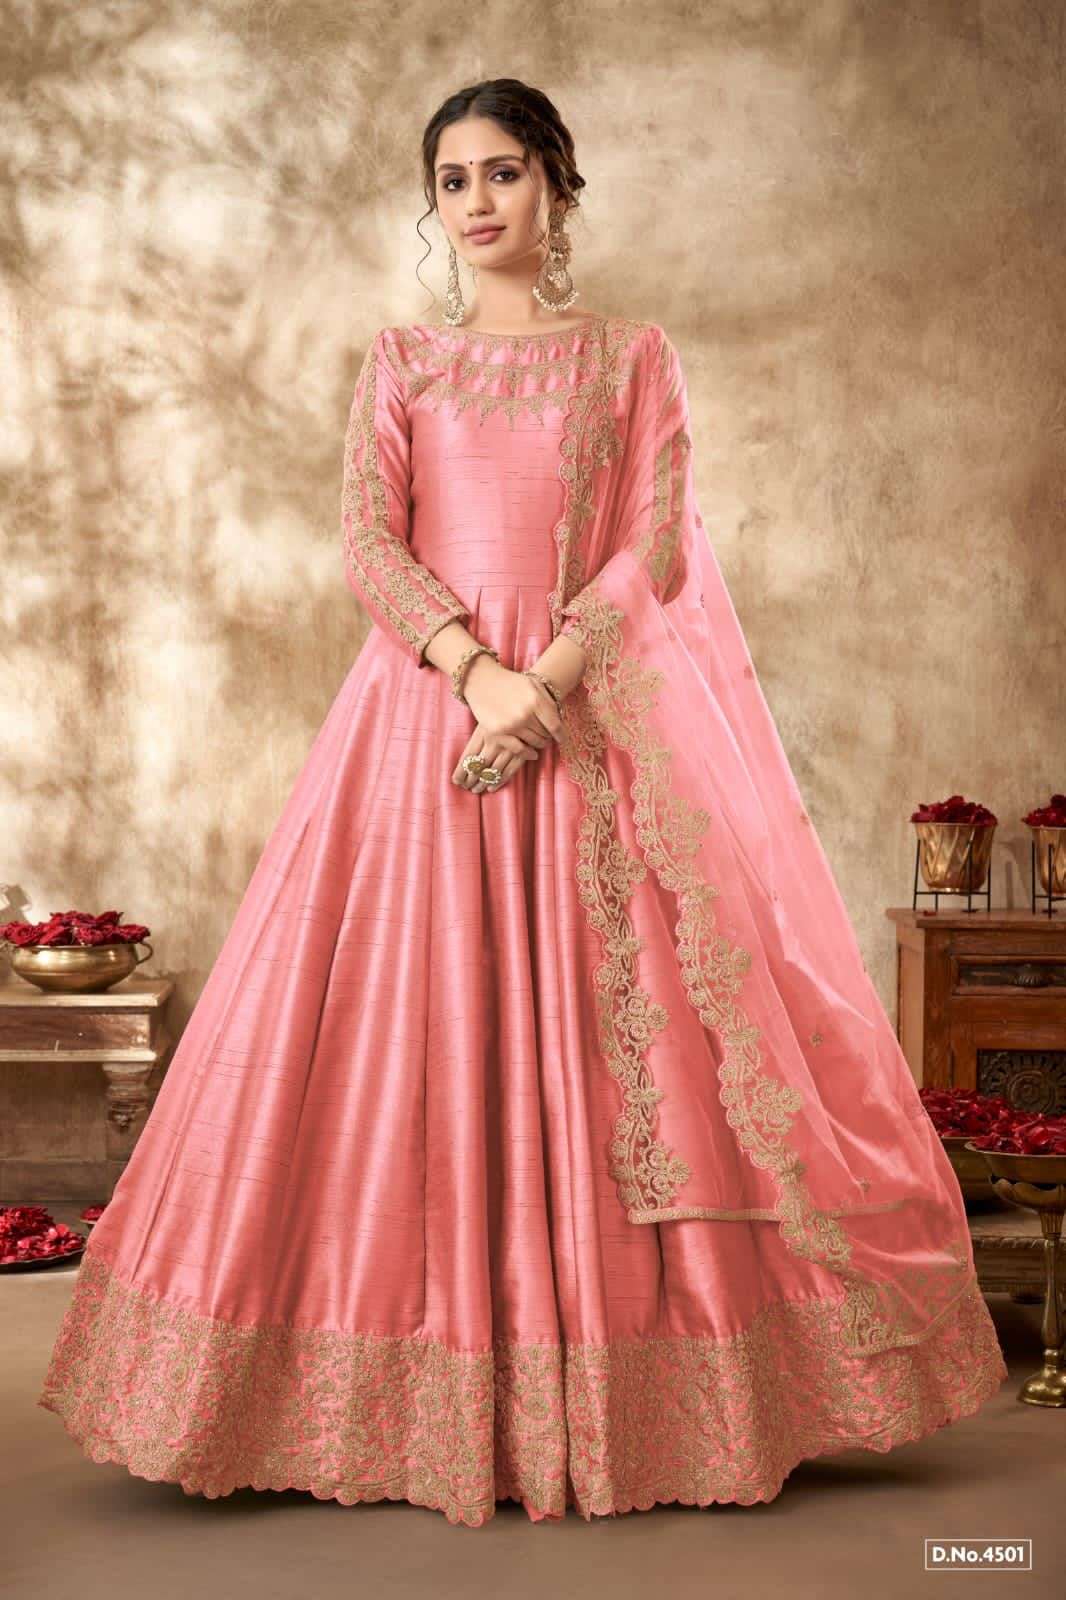 Aanaya 4501 Partywear Semi-stitched Dress Wholesale